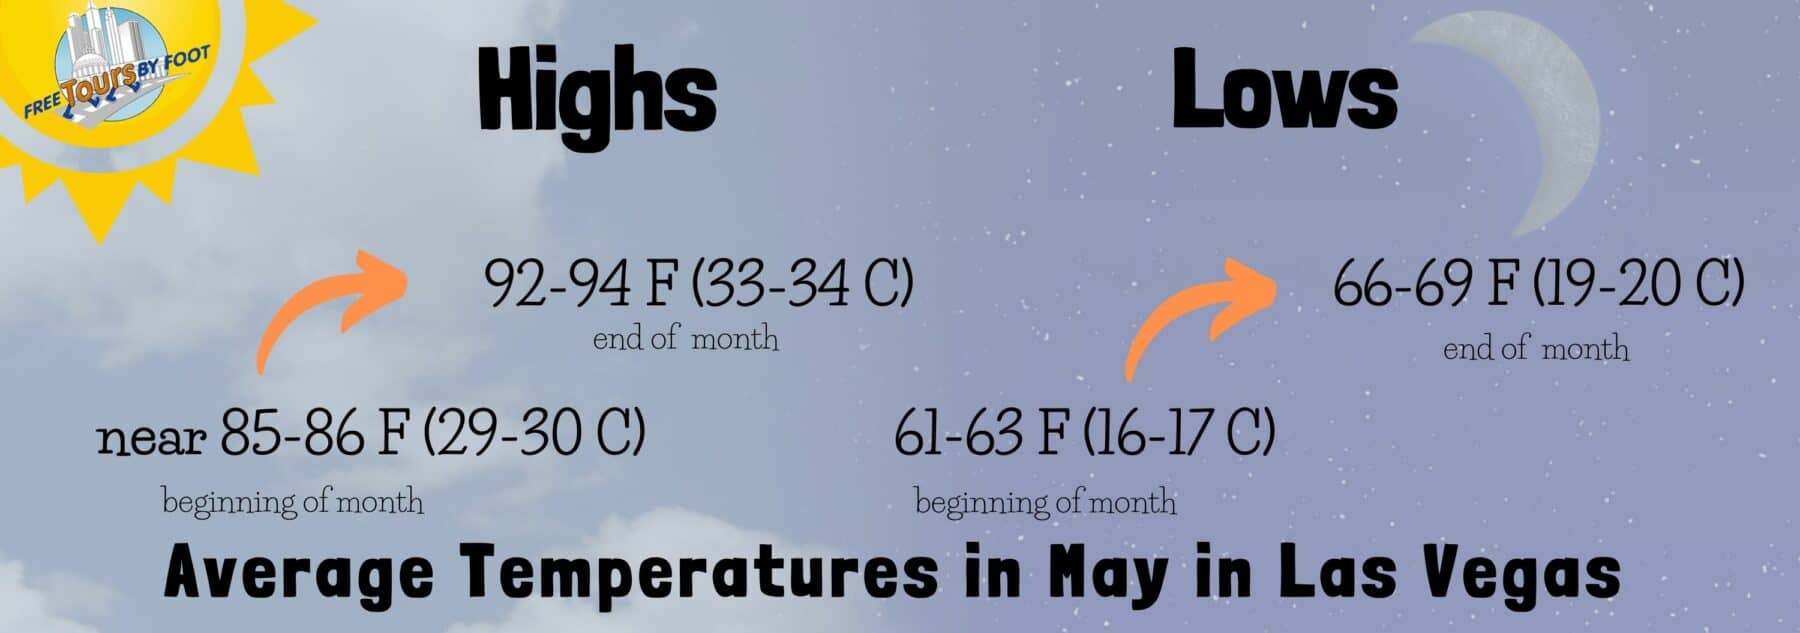 Average Temperatures in May in Las Vegas